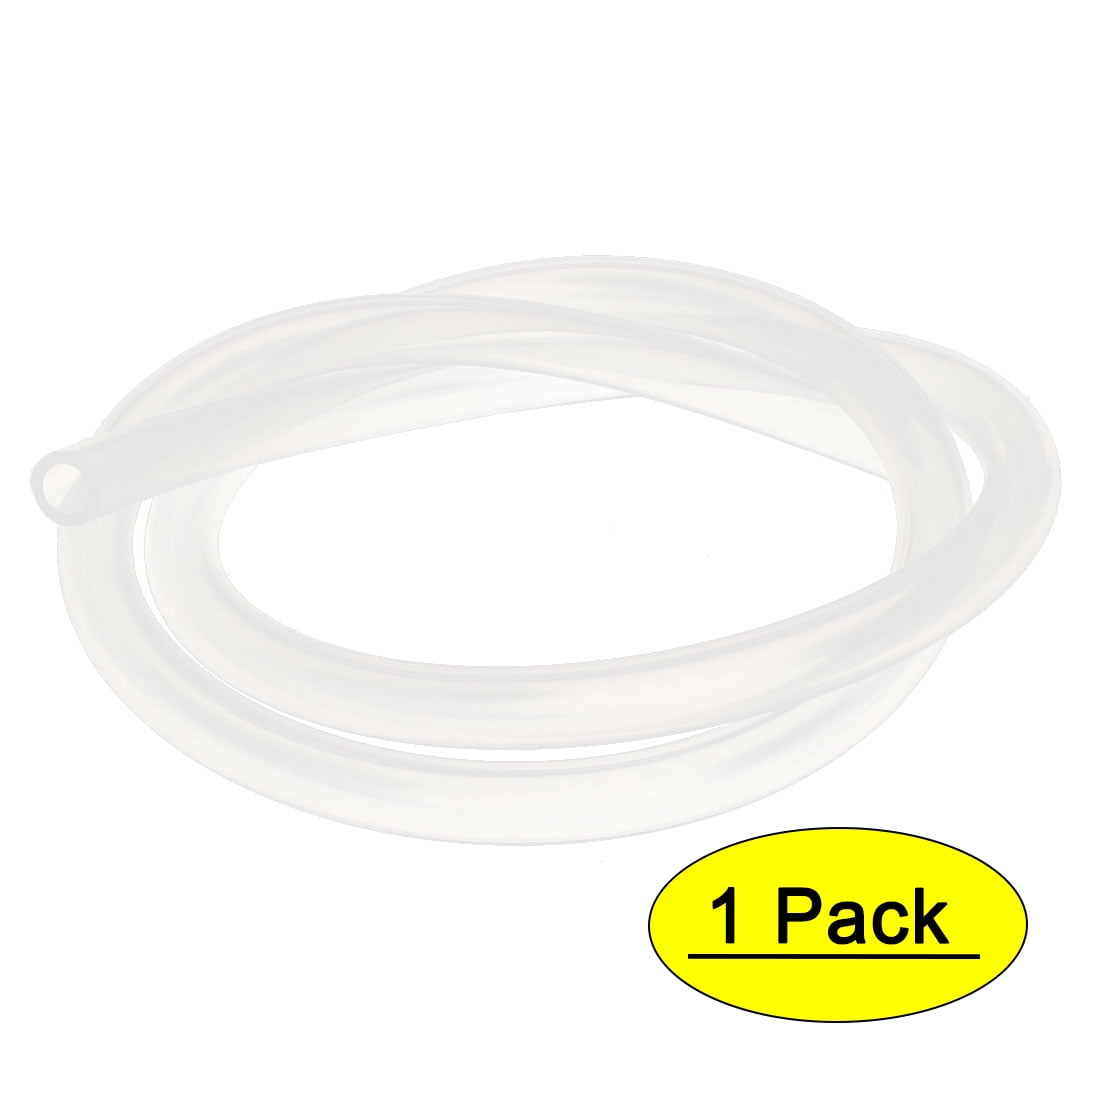 7mm OD Clear PVC Tubing/Hose/Pipe for Lawnmower/Aquarium/Air/Food/Car 5mm ID 